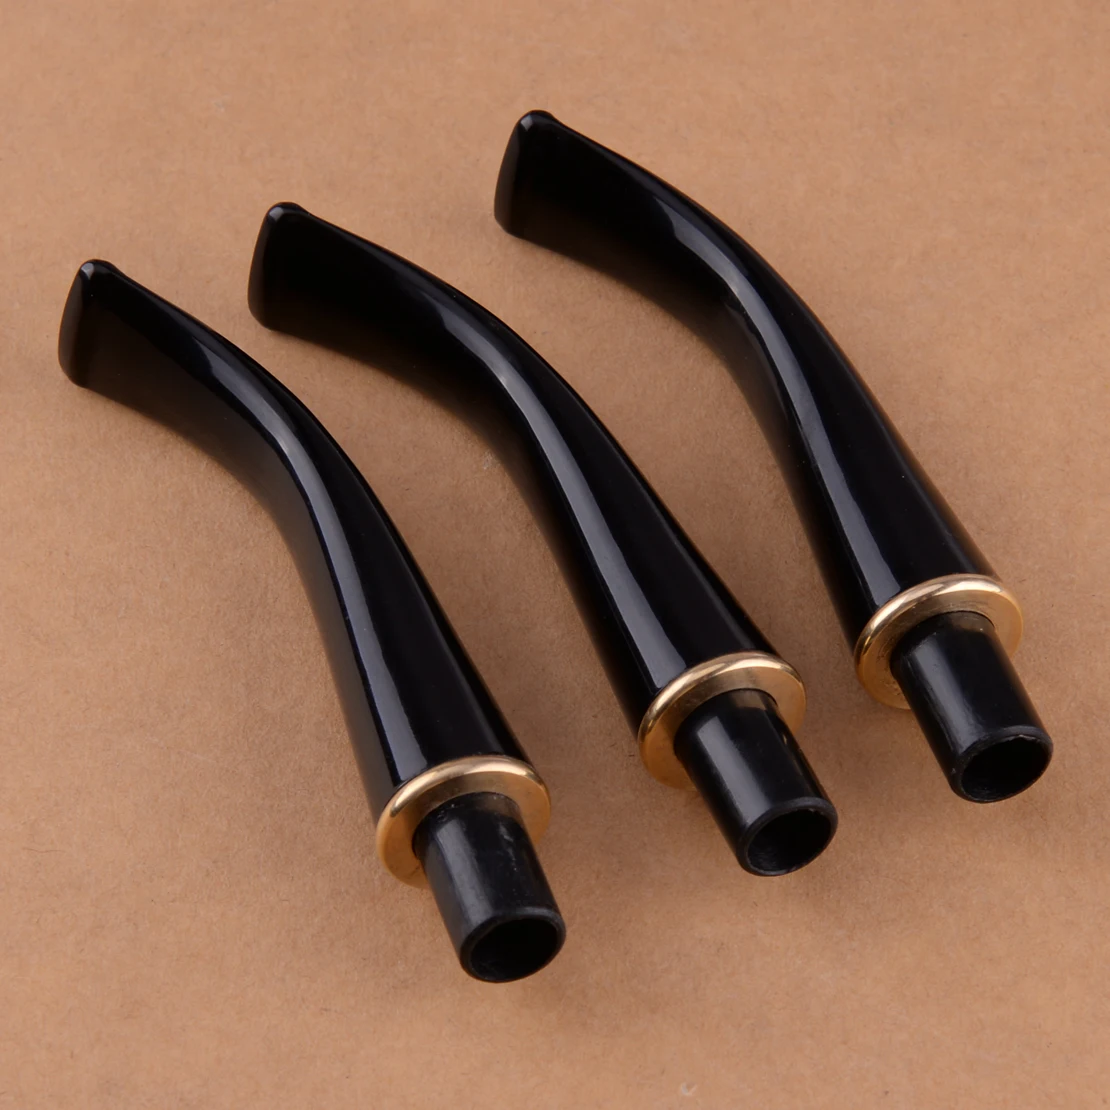 New 2 pcs Black Ebonite vulcanizates mouthpieces Stem For Tobacco Smoking pipe